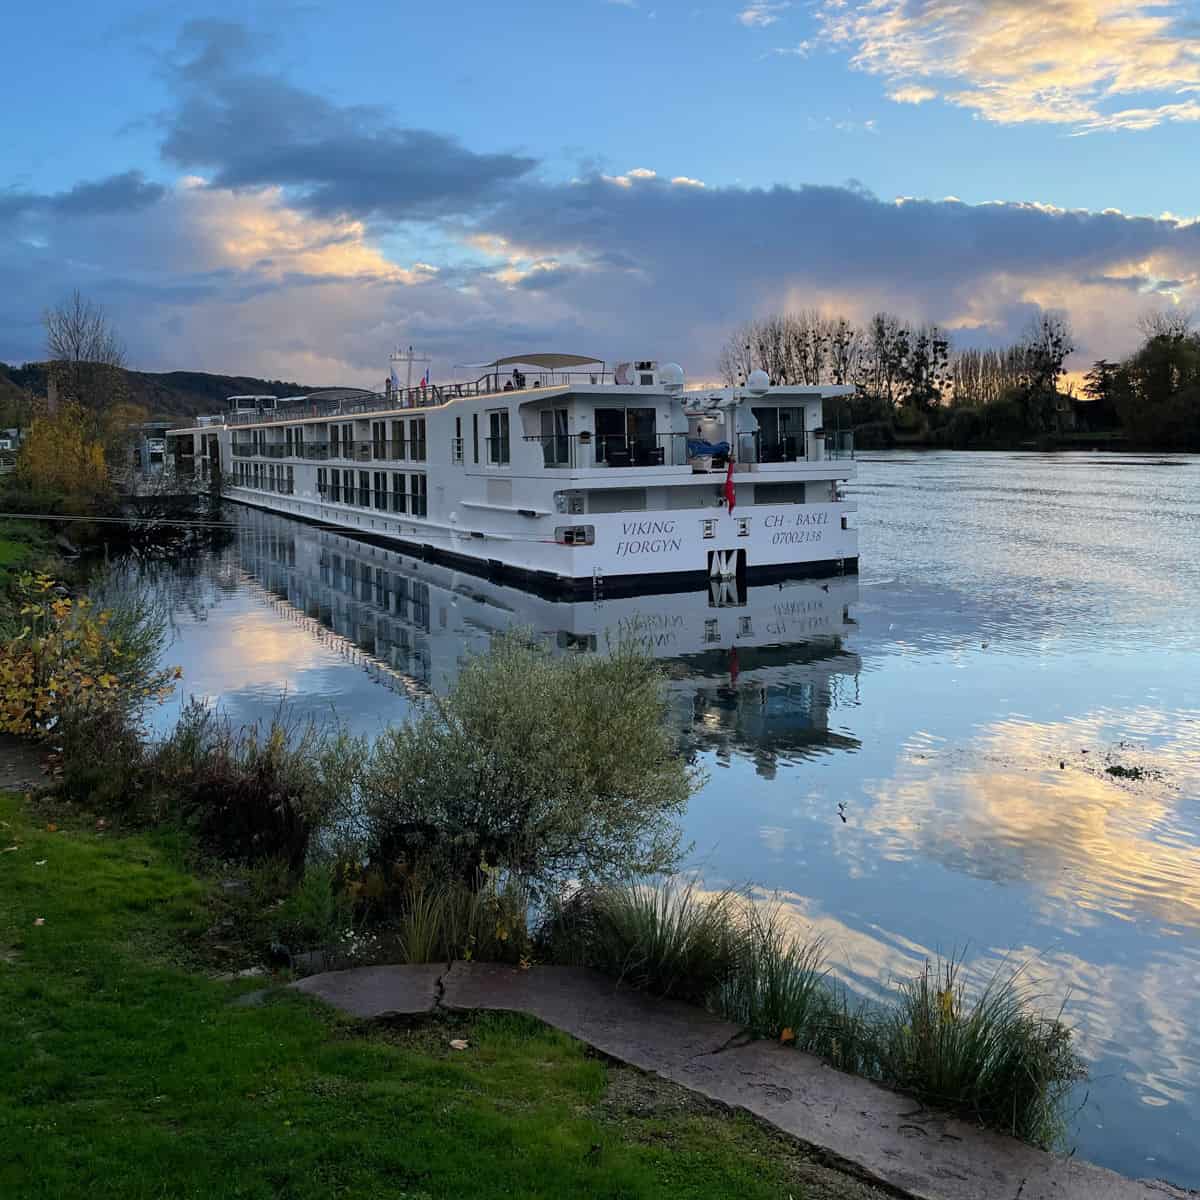 The Best Seine River Cruise in Paris